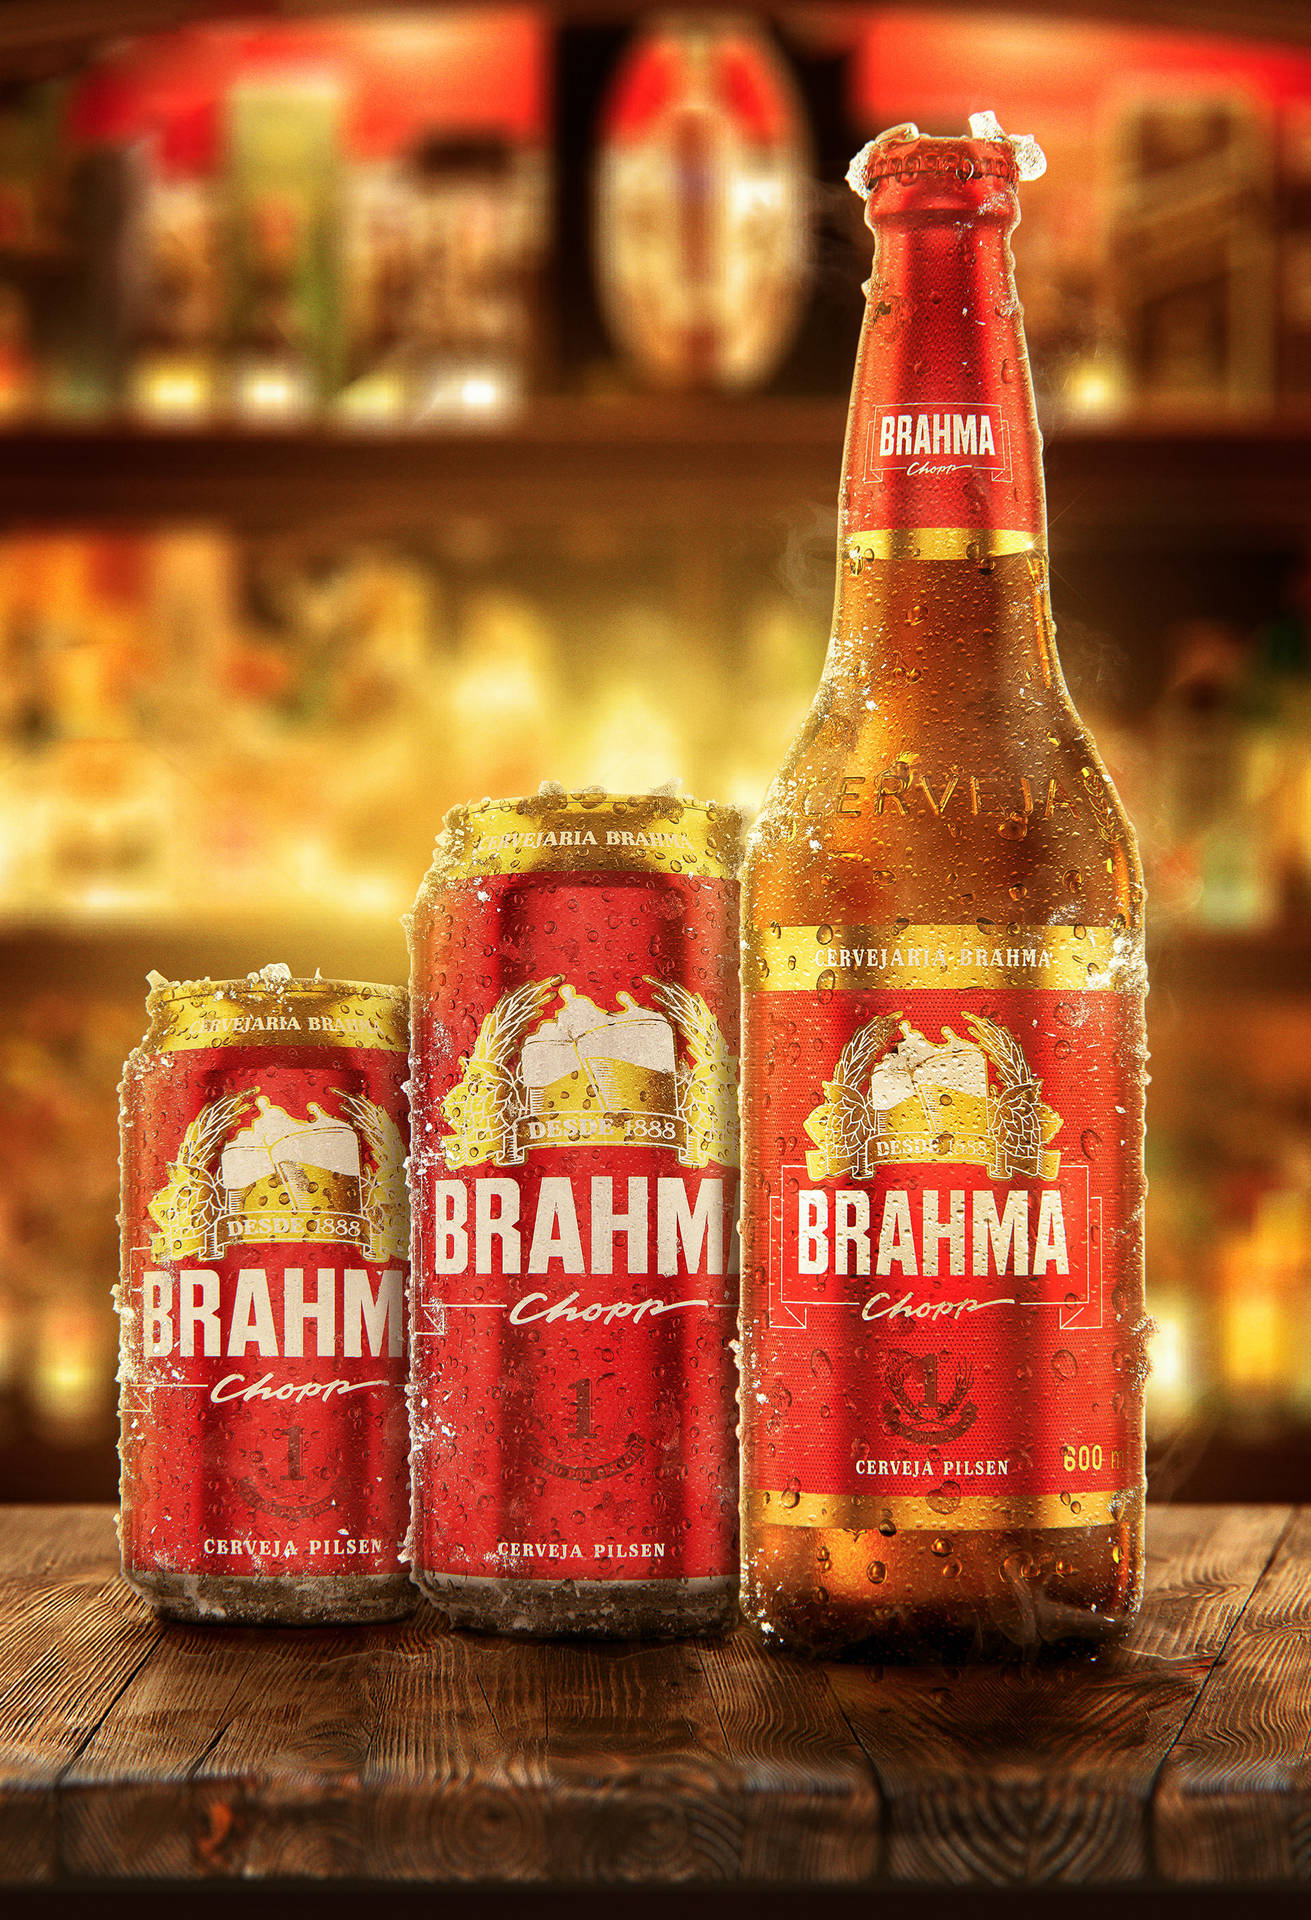 Brazilian Brahma Beer In Bottle And Cans Wallpaper